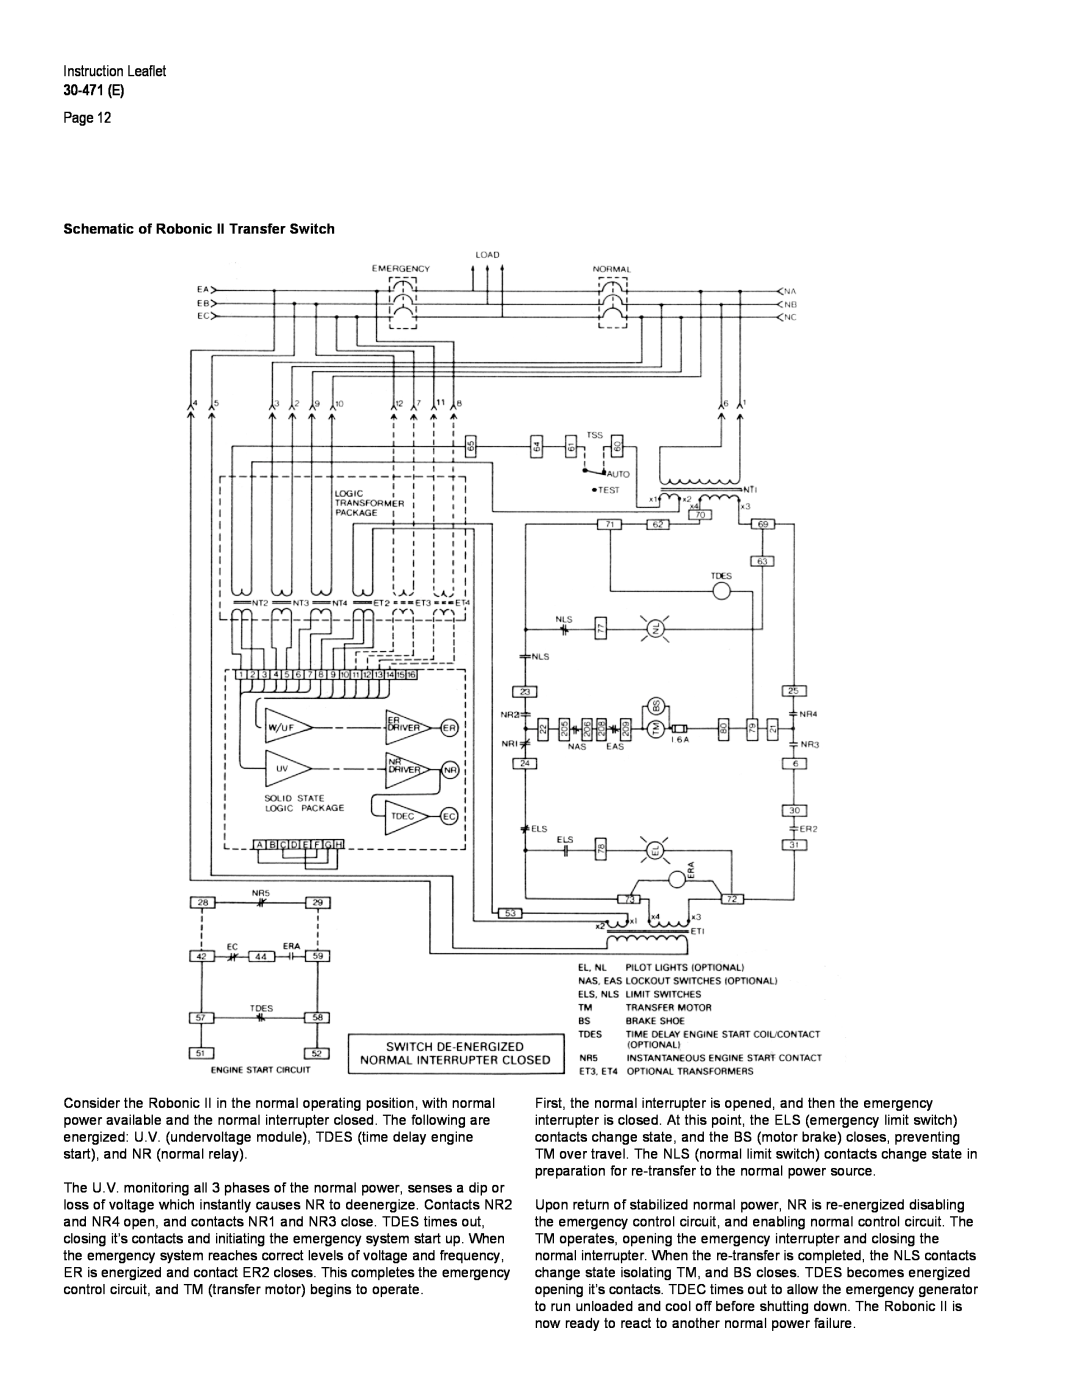 Westinghouse 30-471 (E) warranty 30-471 E, Schematic of Robonic II Transfer Switch 